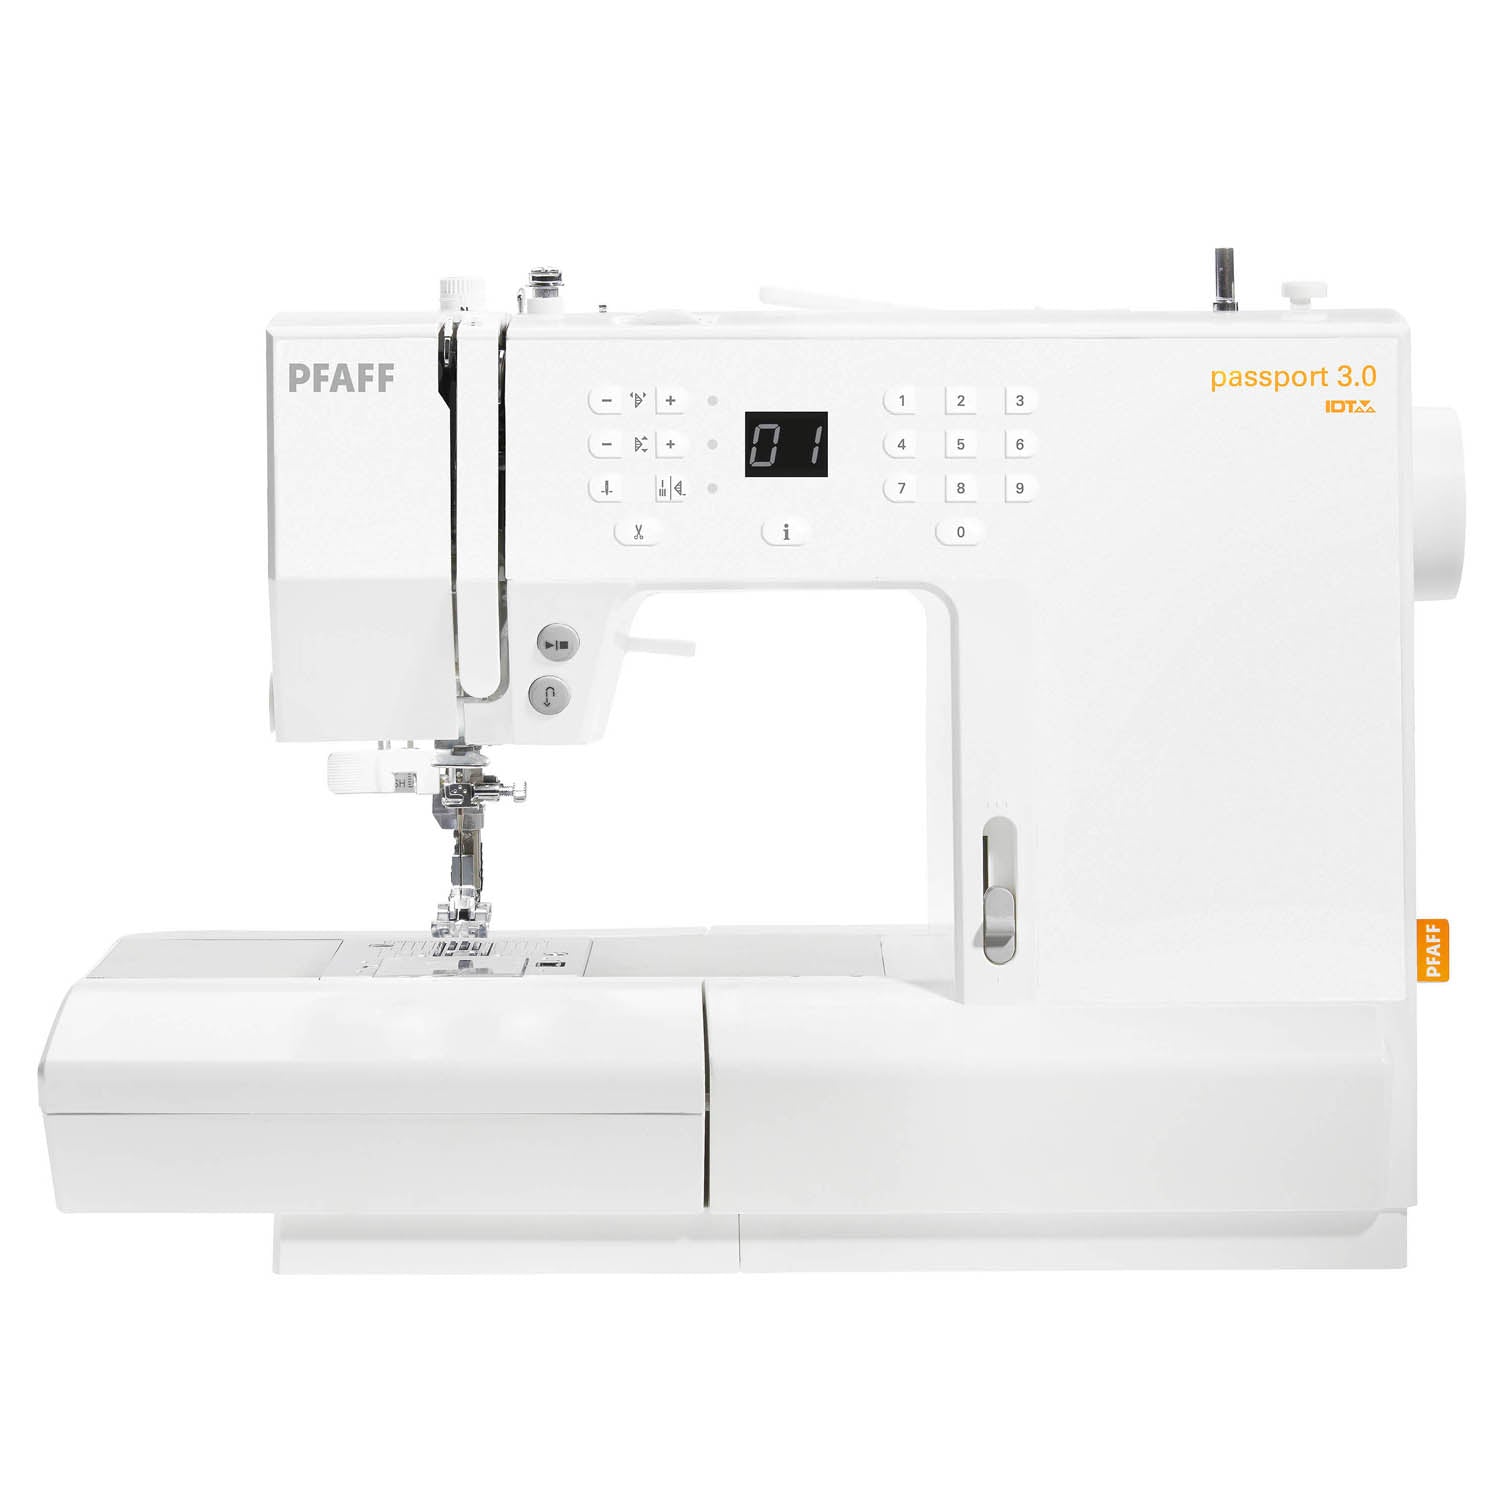 PFAFF Passport 3.0 Sewing Machine